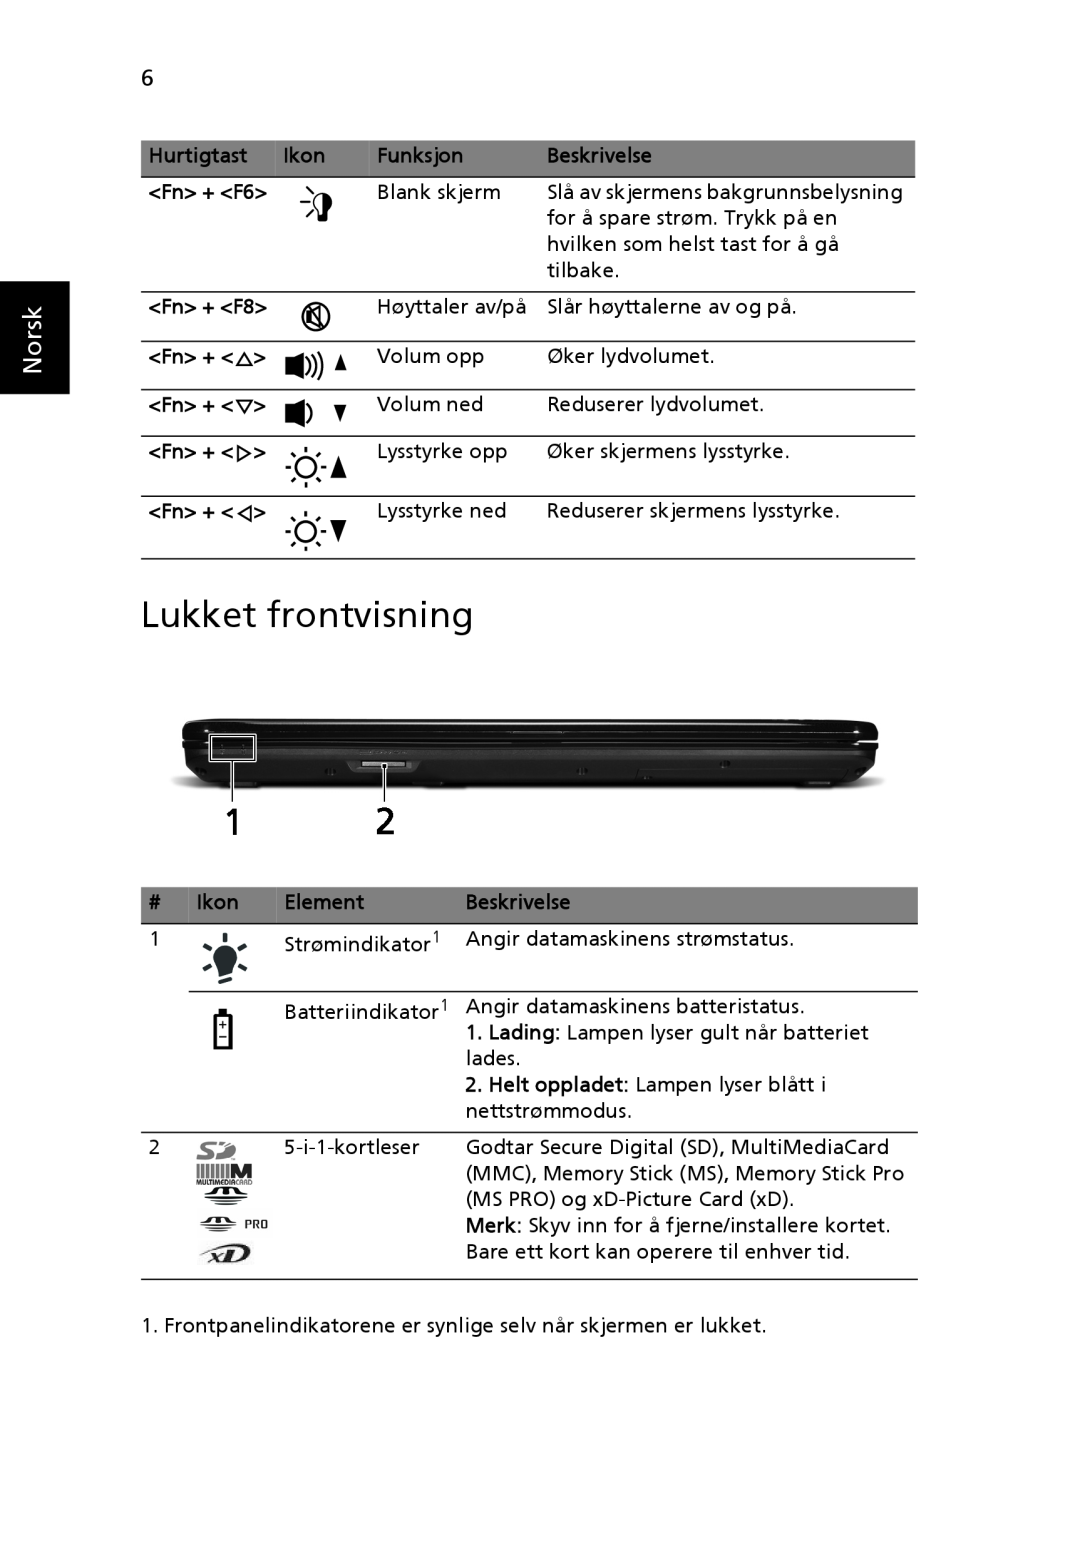 eMachines G725, G525 manual Lukket frontvisning, Norsk 